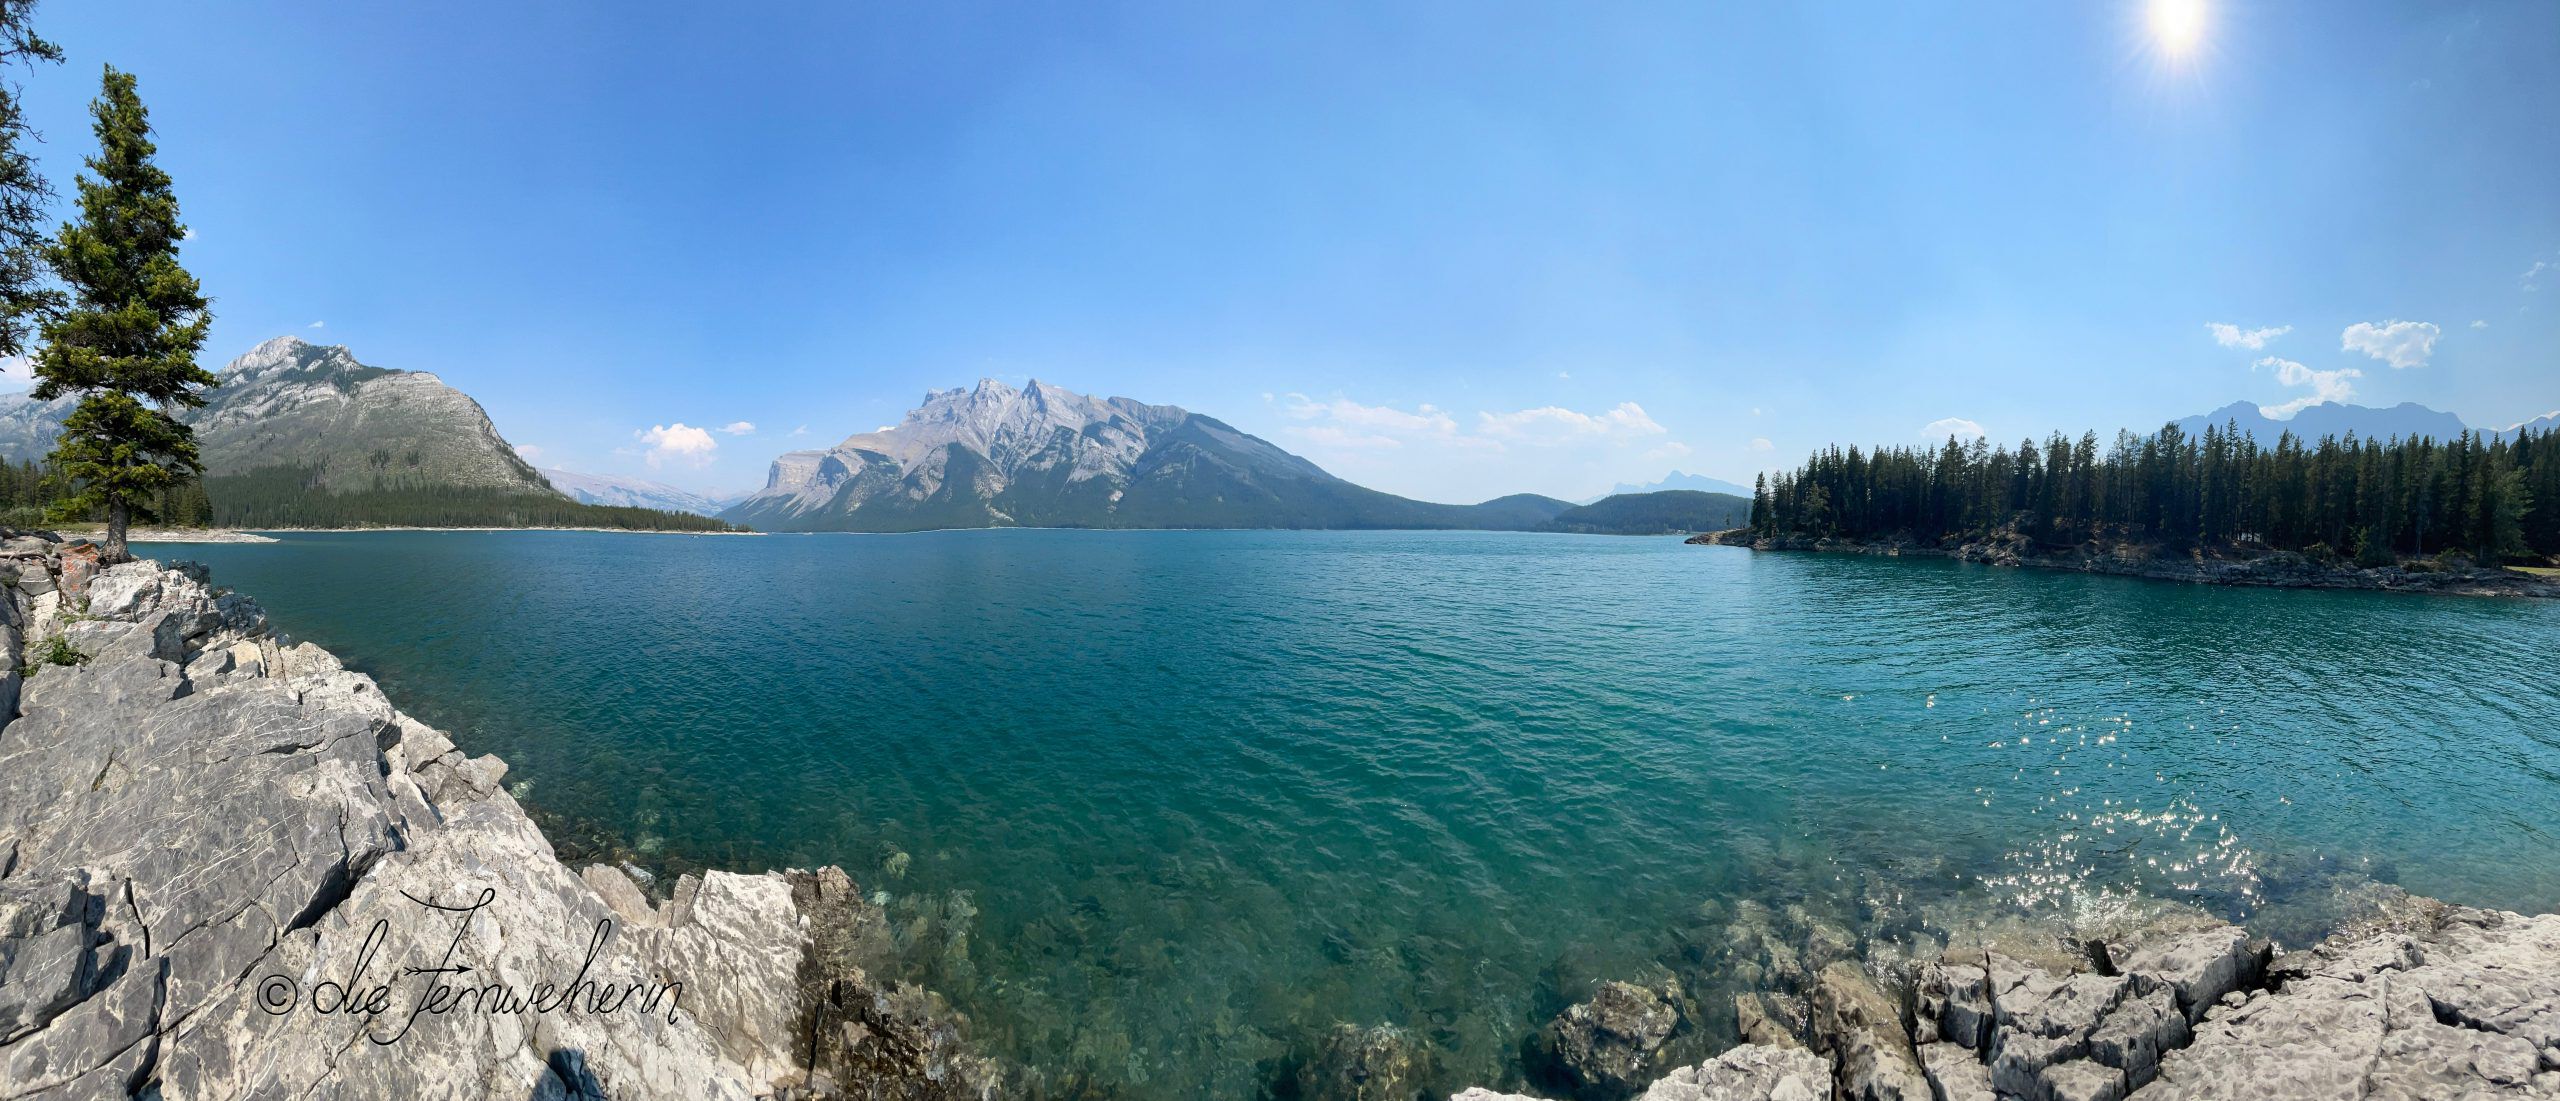 Beautiful greenish-blue Lake Minnewanka in Banff National Park.